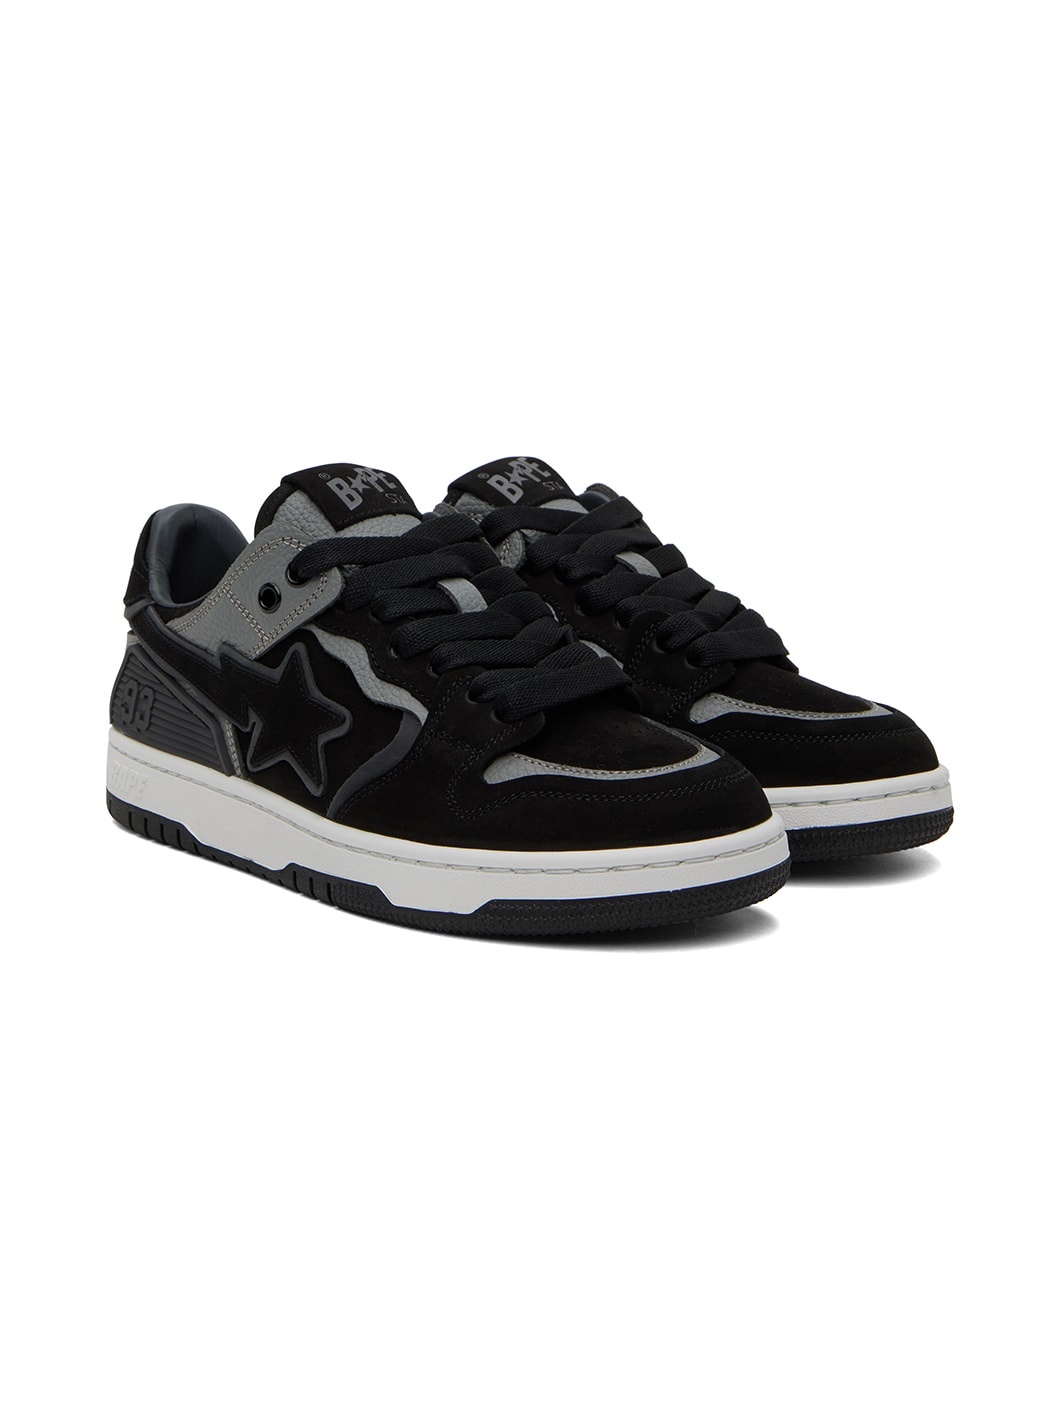 Black & Gray Sk8 Sta #6 M2 Sneakers - 4